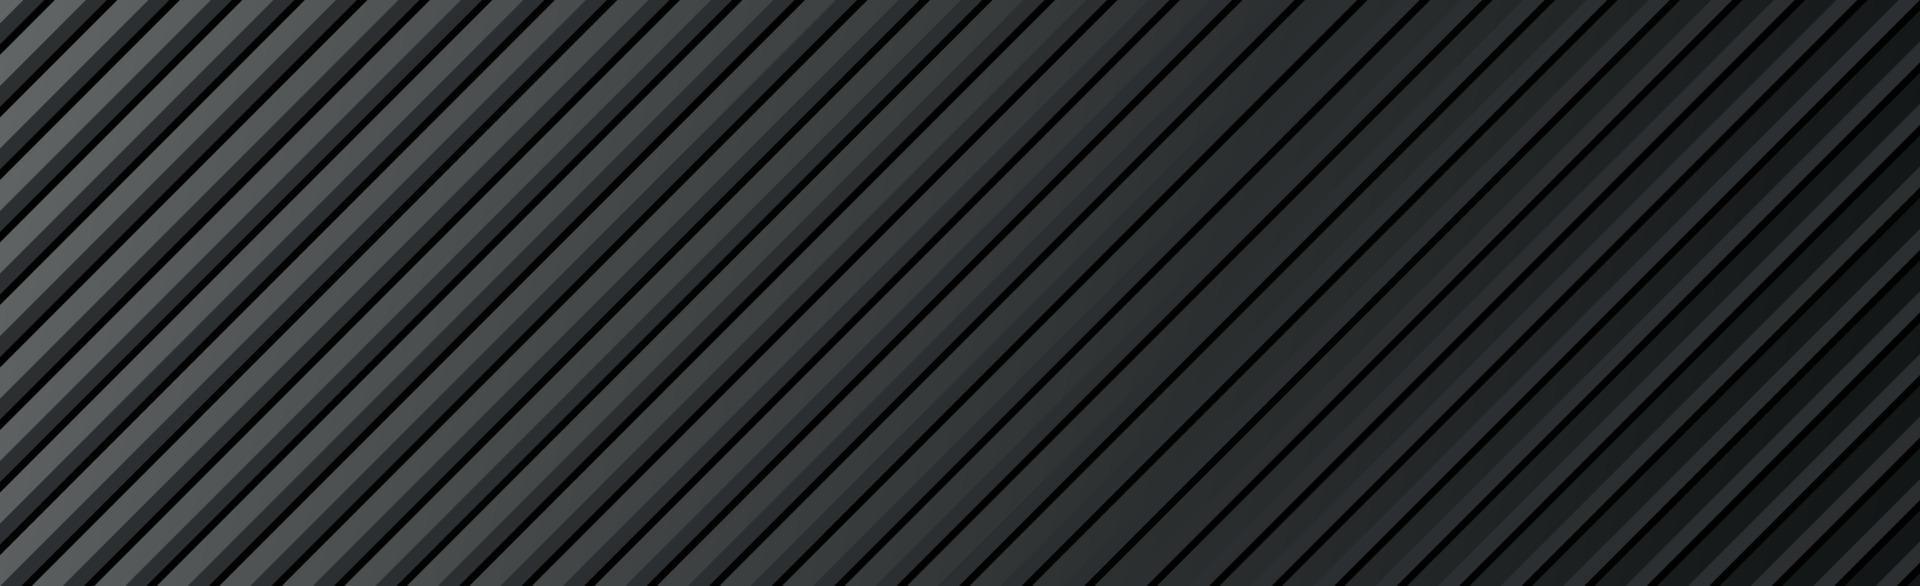 fundo de textura gradiente escuro panorâmico abstrato linhas inclinadas - vetor